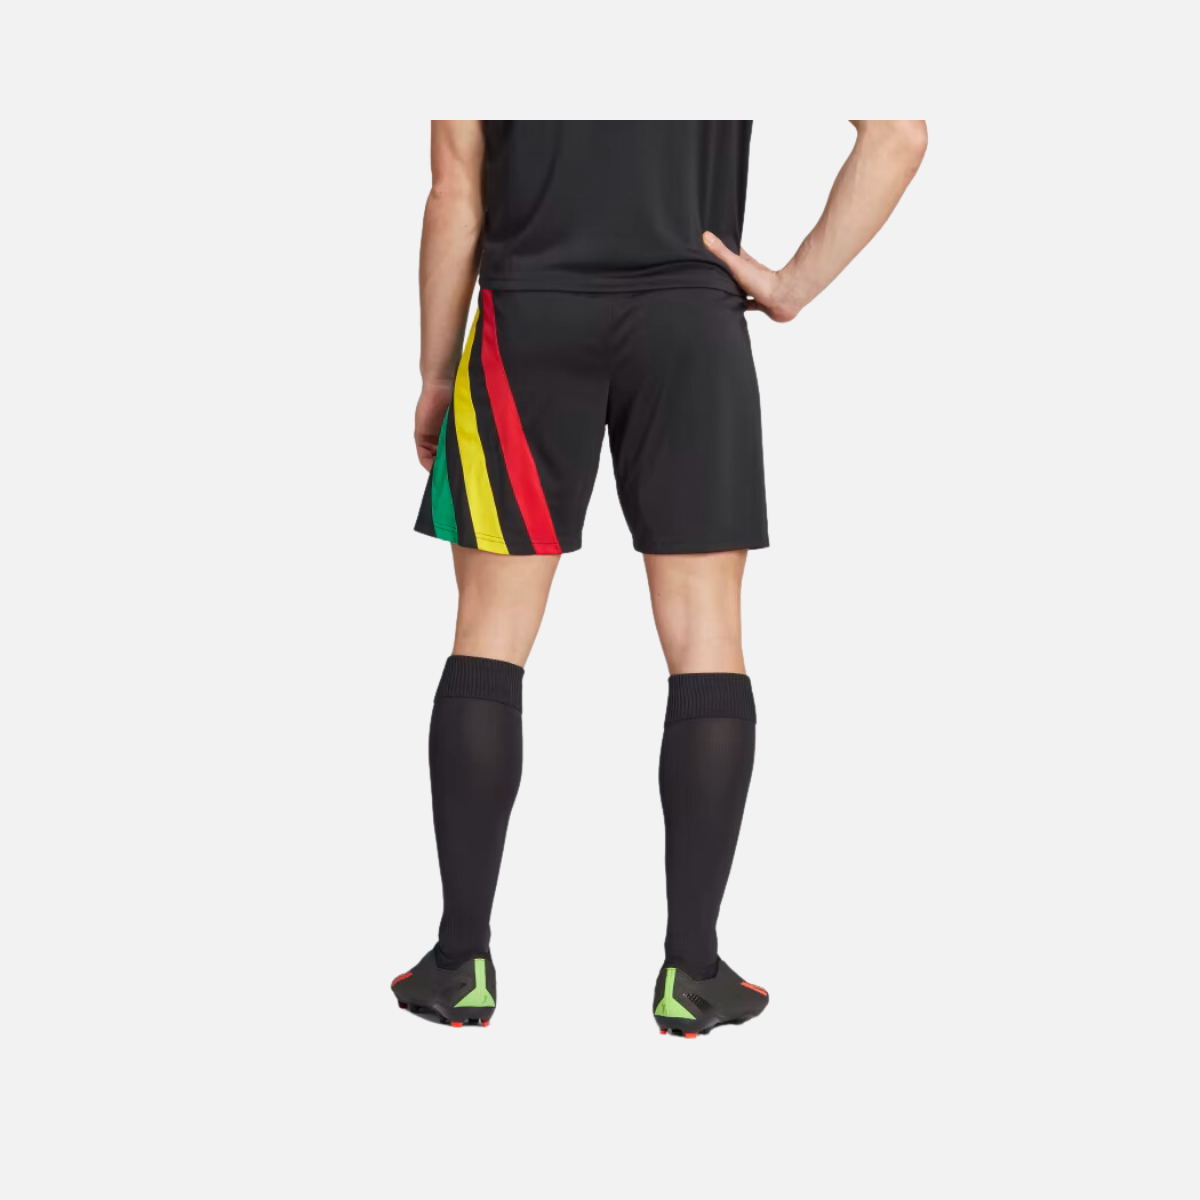 Adidas Fortore 23 Men's Football Shorts -Black/Team Collegiate Red/Team Yellow/Team Green